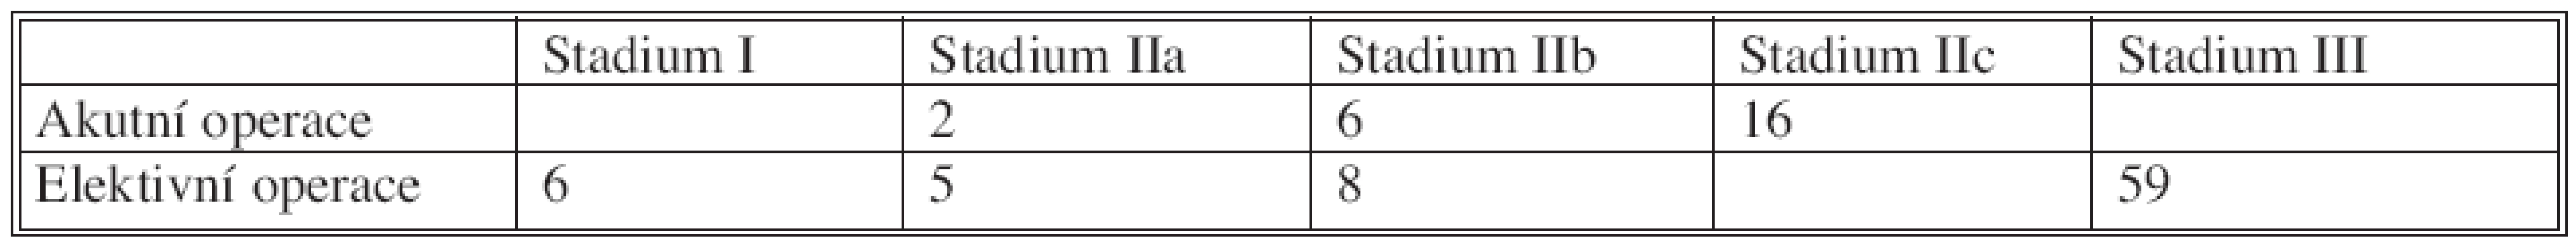 Hodnocení indikací k operaci podle Hanbena a Stocka
Tab. 2. The evaluation of operation’s indication according to Hanse nand Stock’s classification